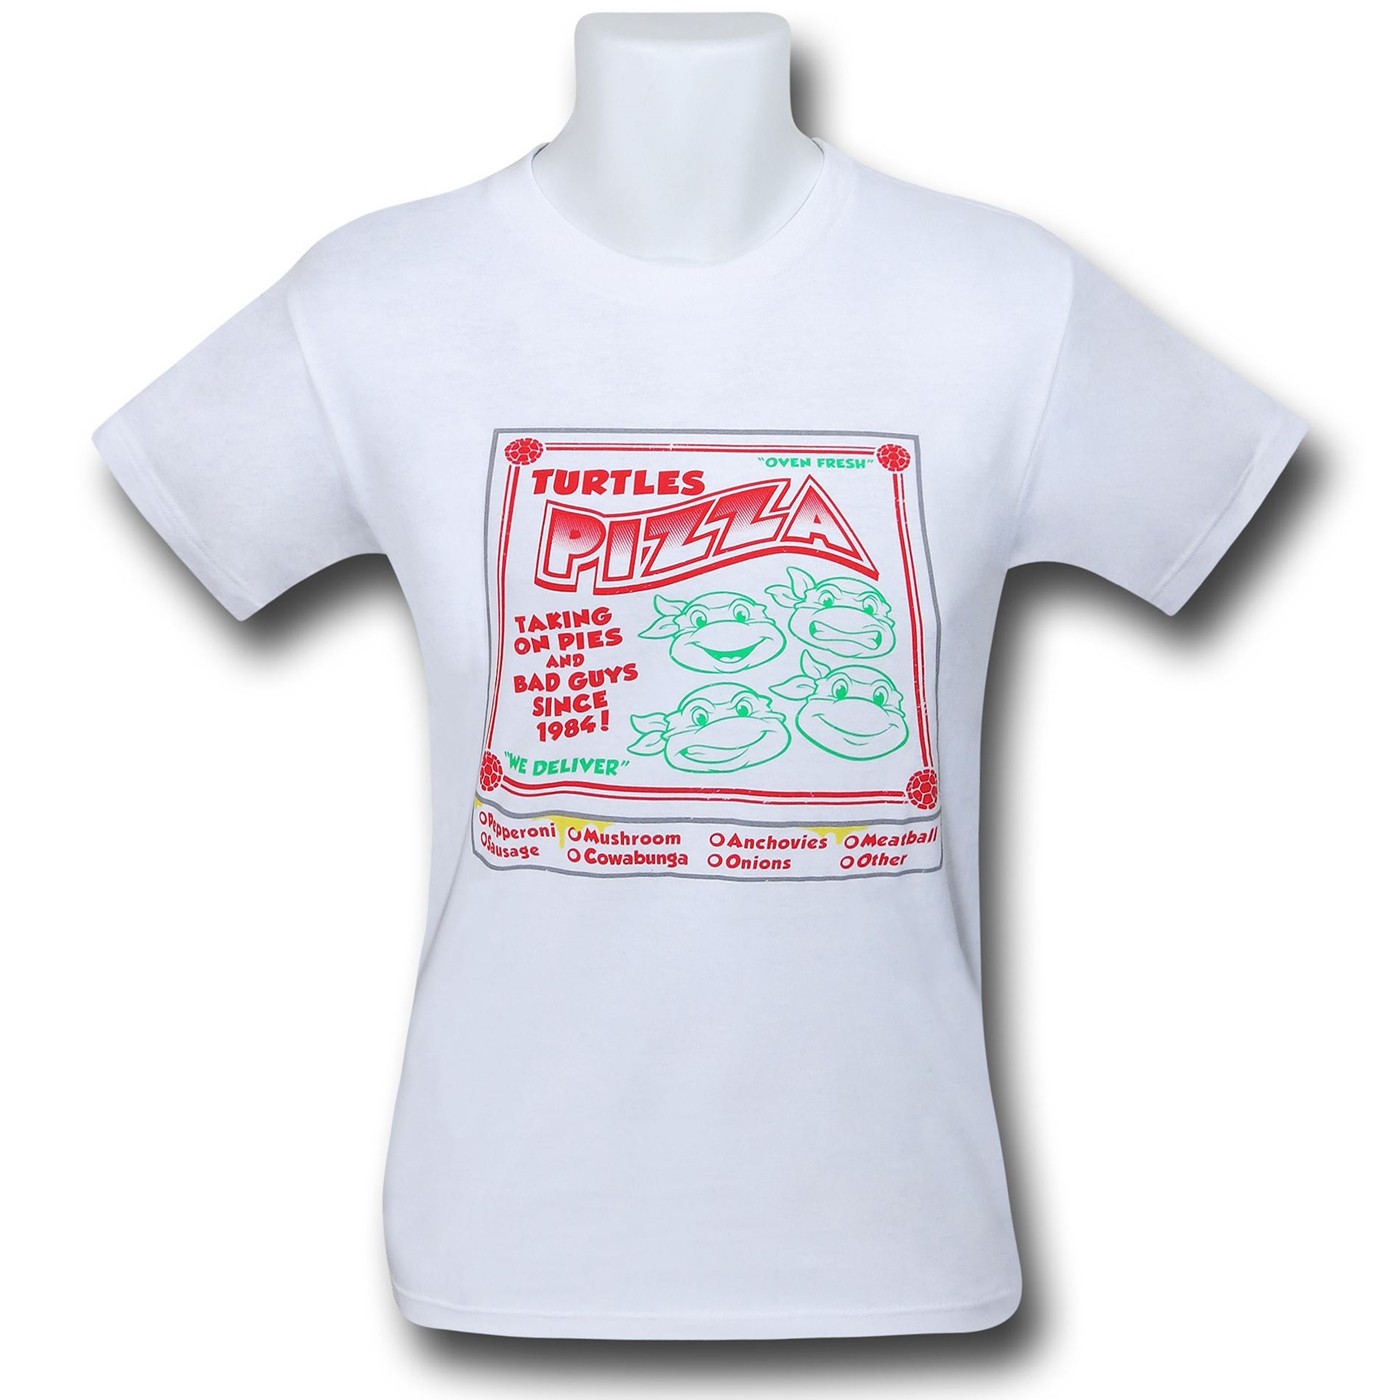 TMNT Turtles Pizza on White 30 Single T-Shirt